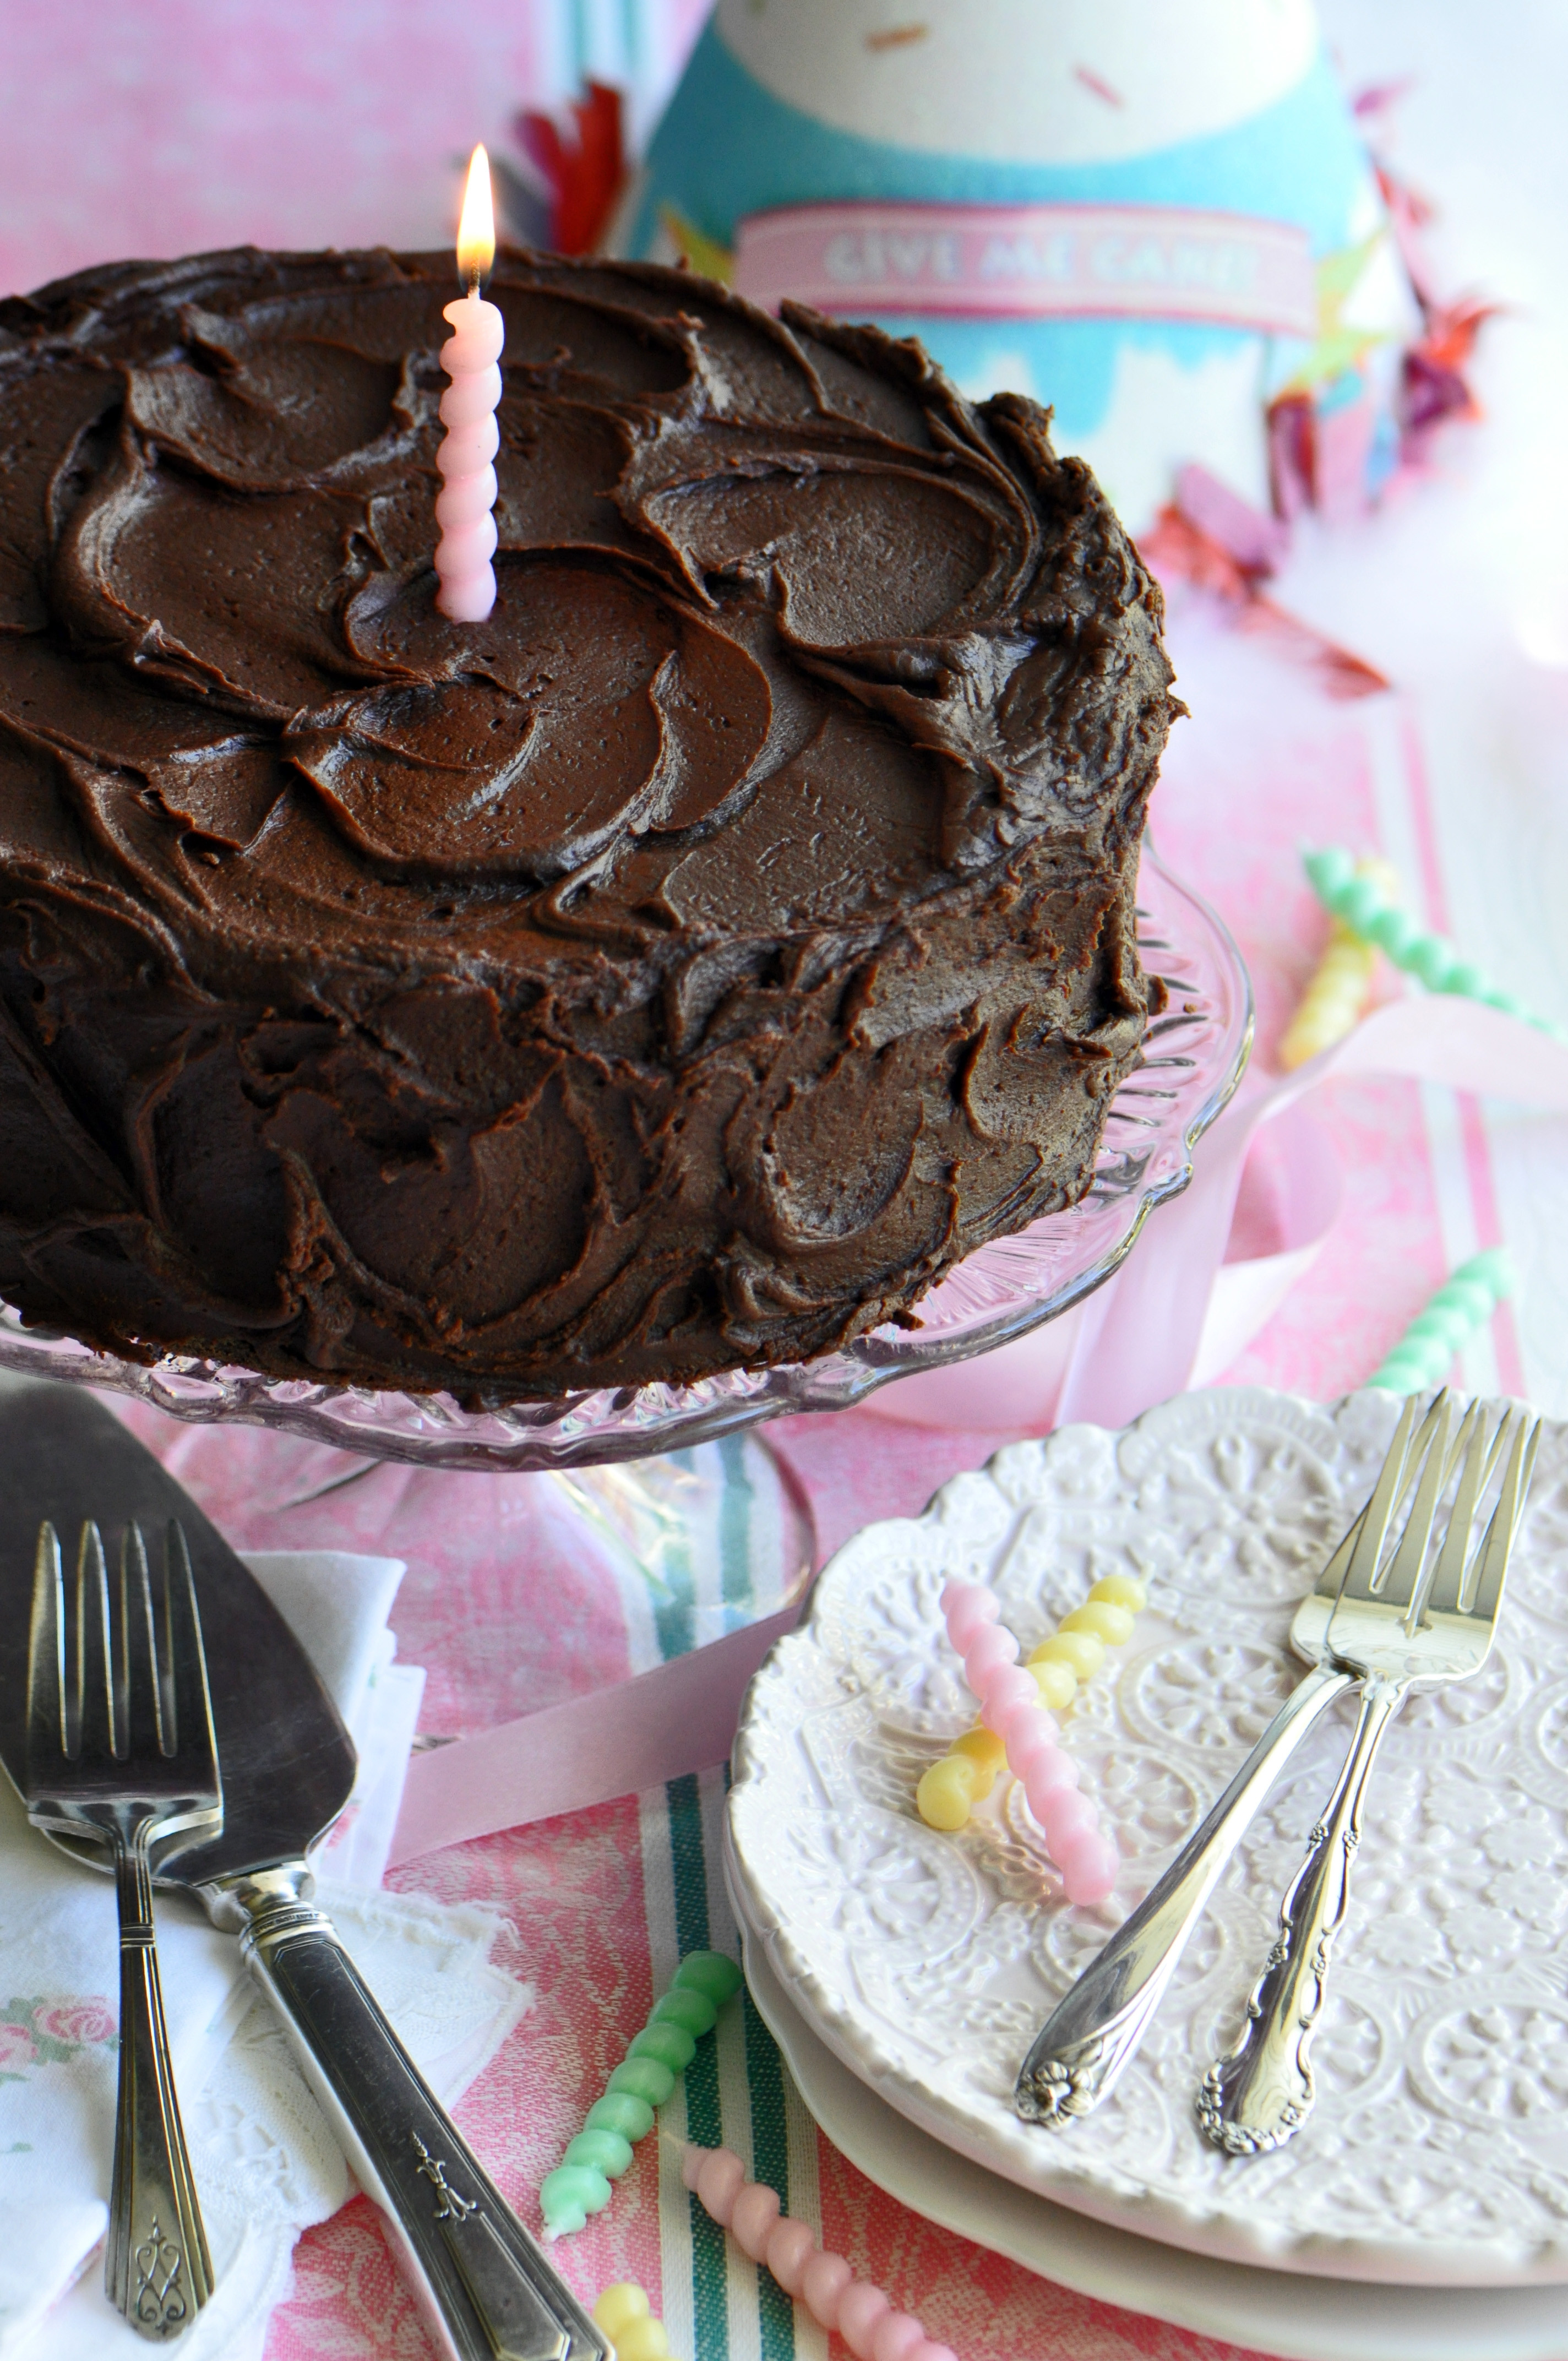 Best ideas about Chocolate Birthday Cake Recipes
. Save or Pin Chocolate Fudge Birthday Cake Baking Recipe Now.